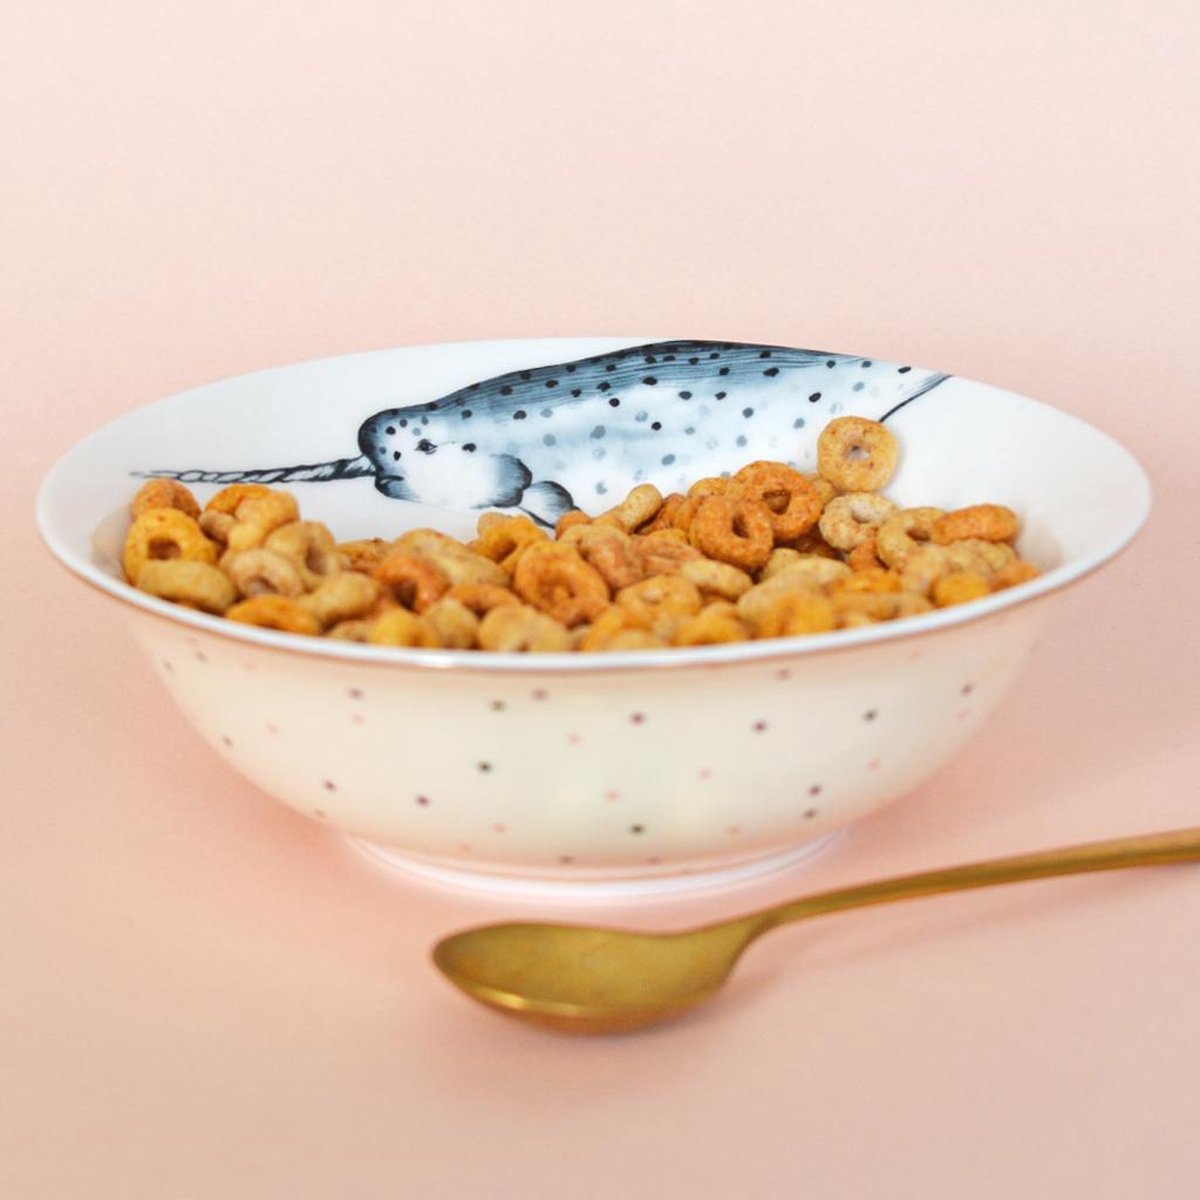 Yvonne Ellen porseleinen cereal bowl met narwal